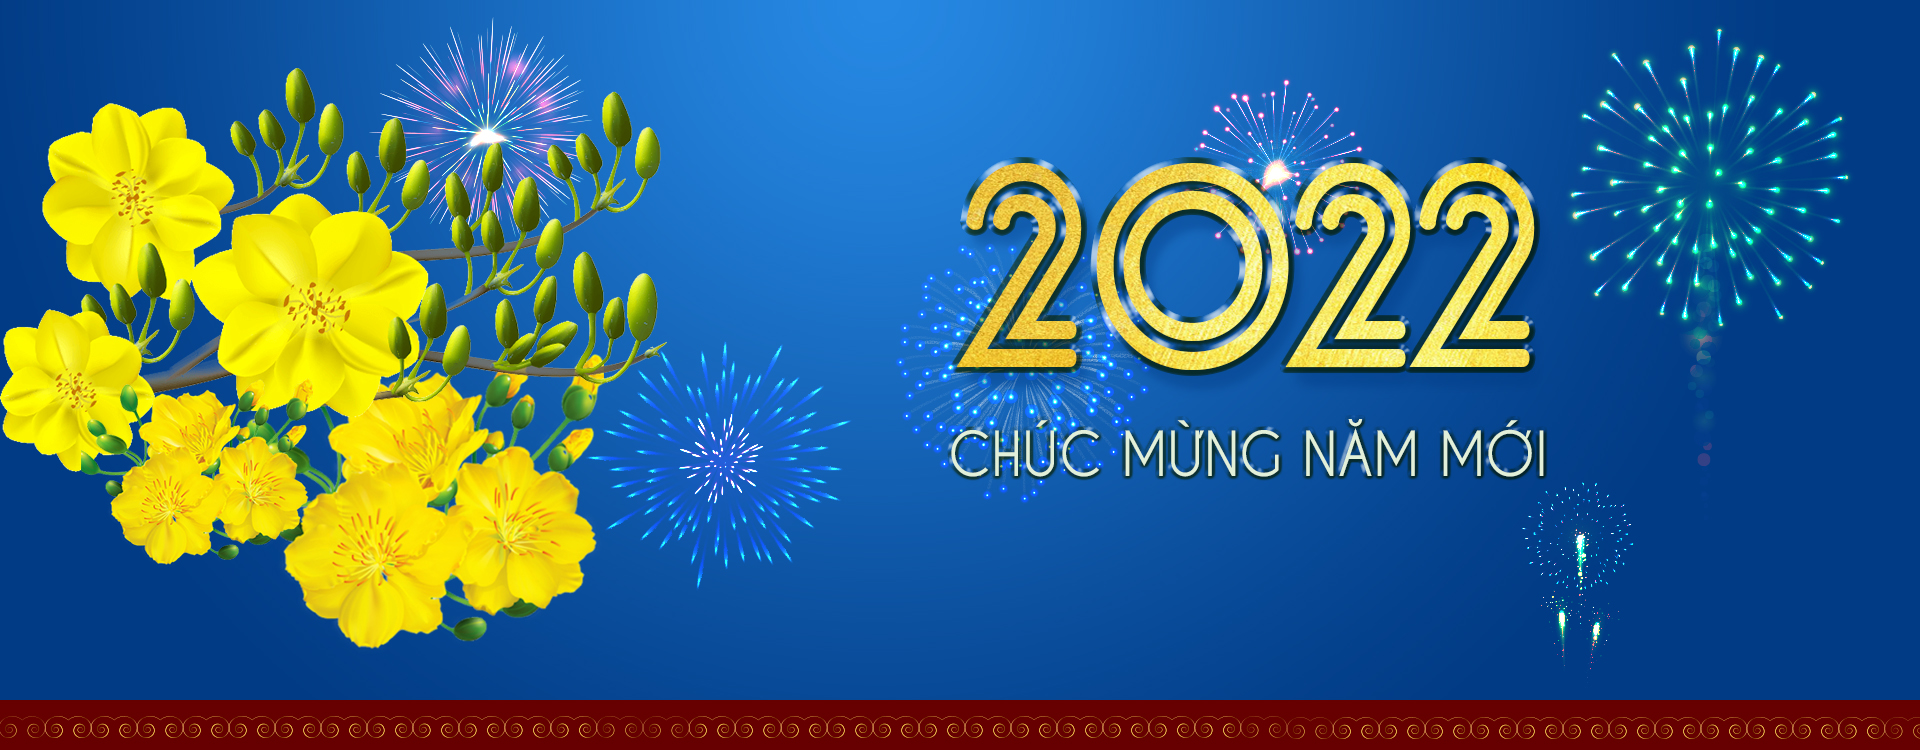 CHUC MUNG NAM MOI 2022-vn